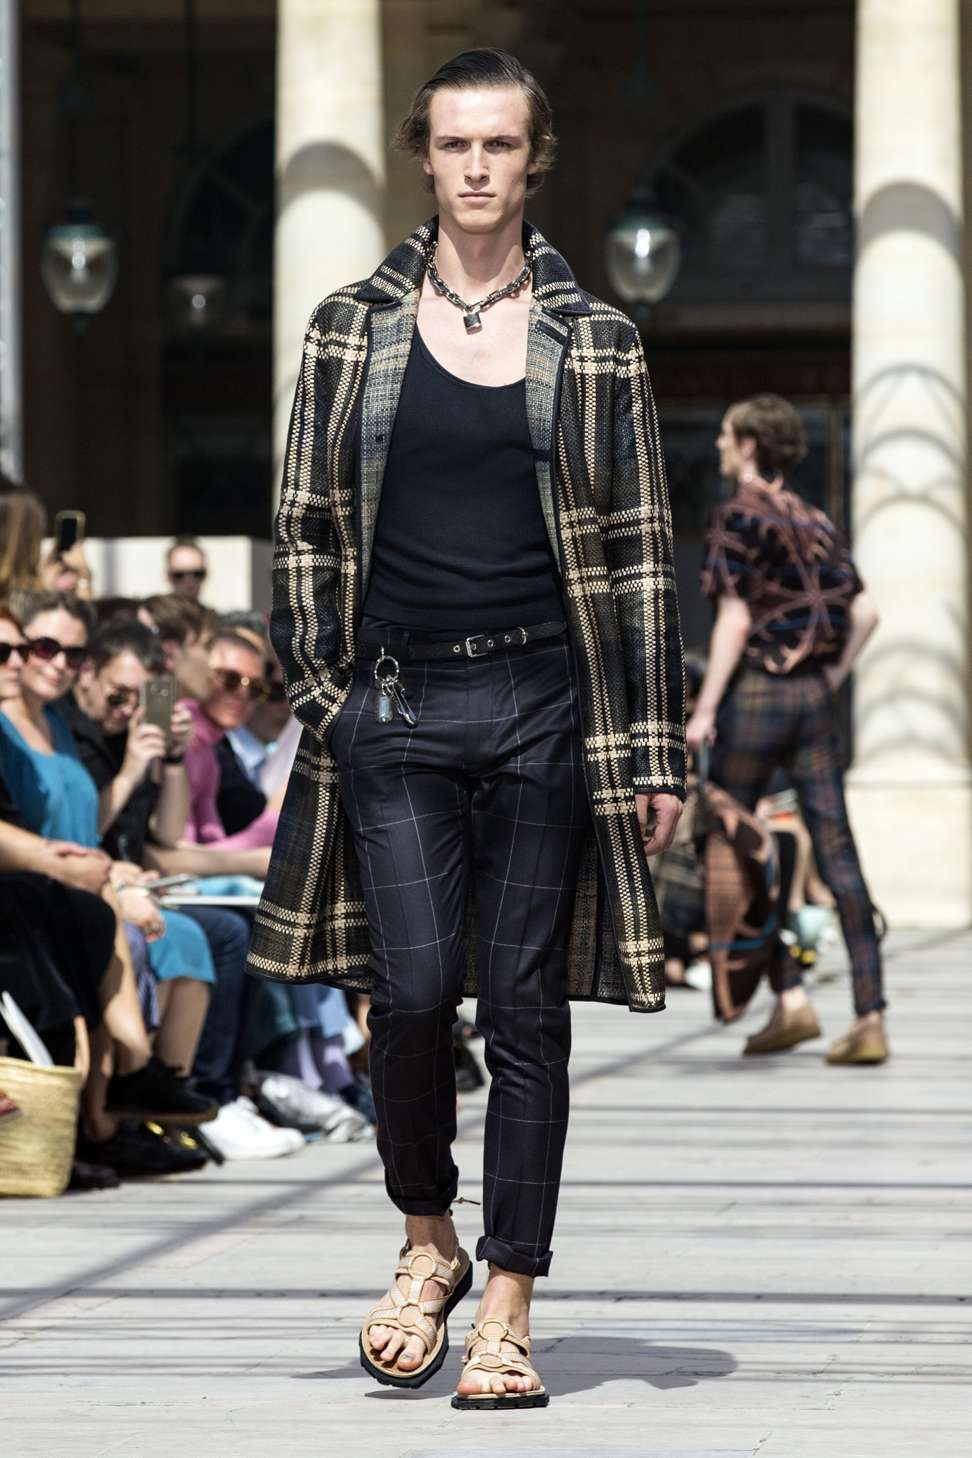 Louis Vuitton SS18: Menswear runway draws Asian celebrities Gong